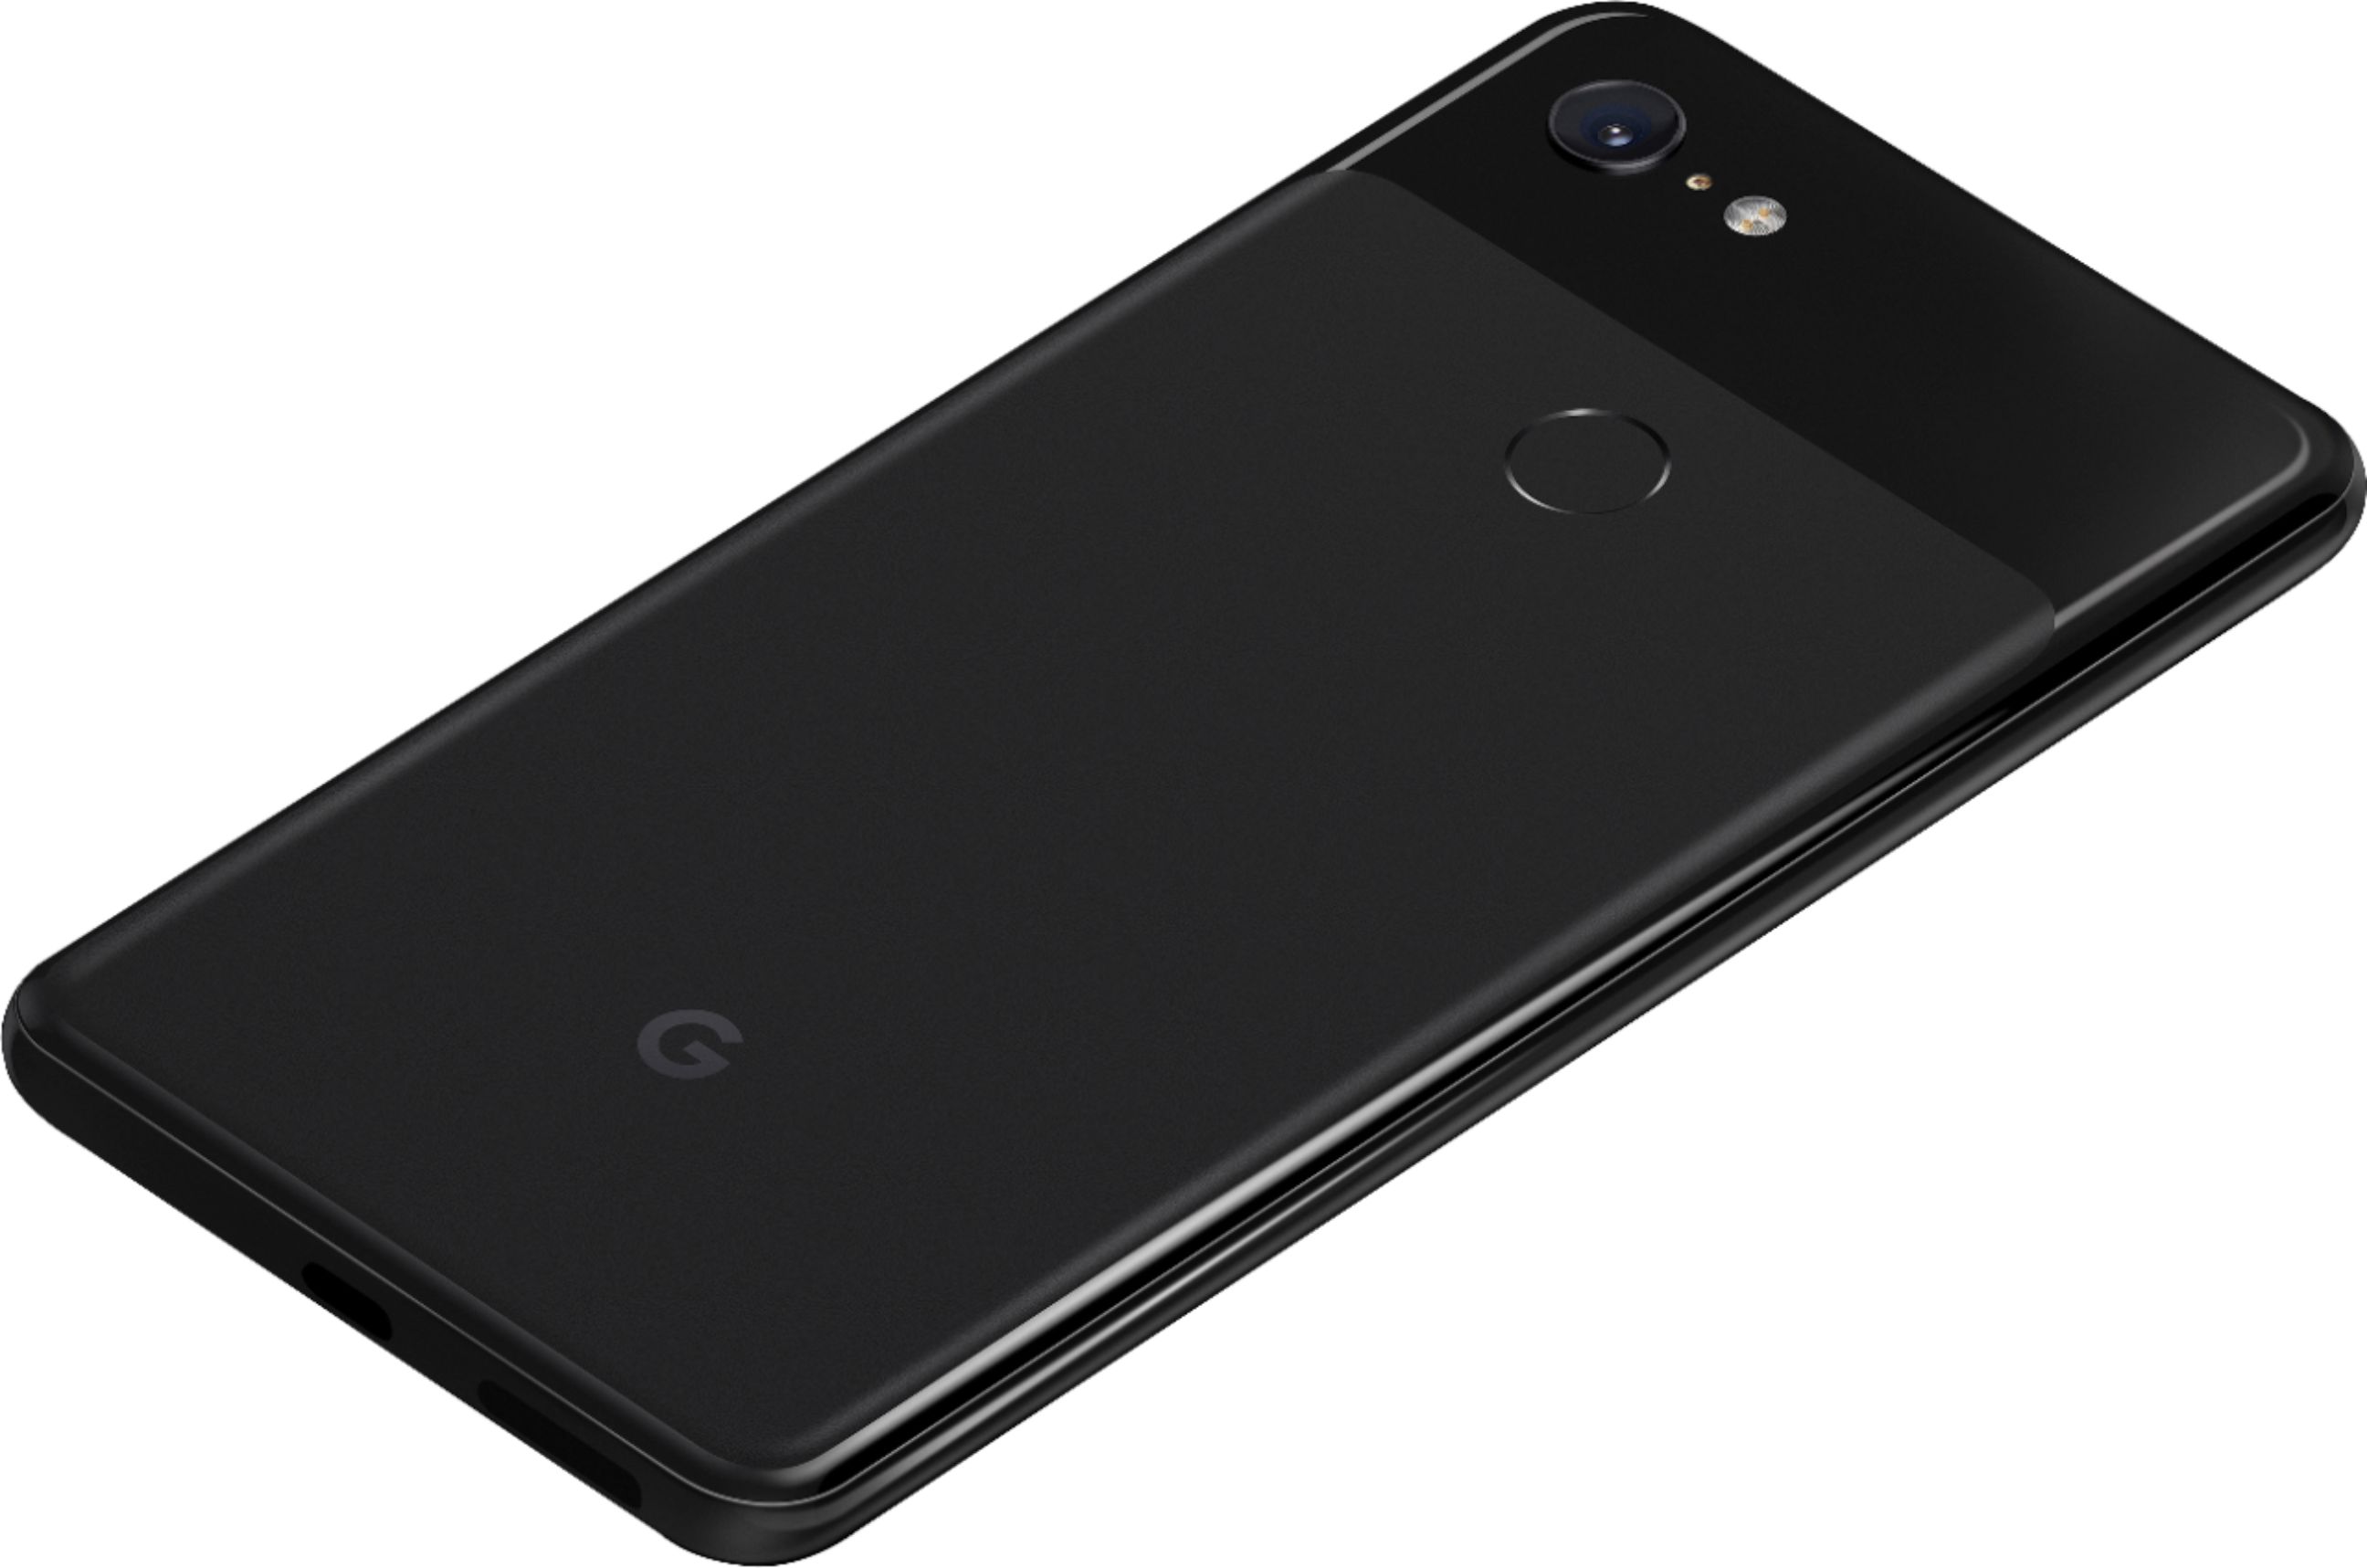 Best Buy: Google Pixel 3 XL 128GB Just Black (Verizon) GA00478-US